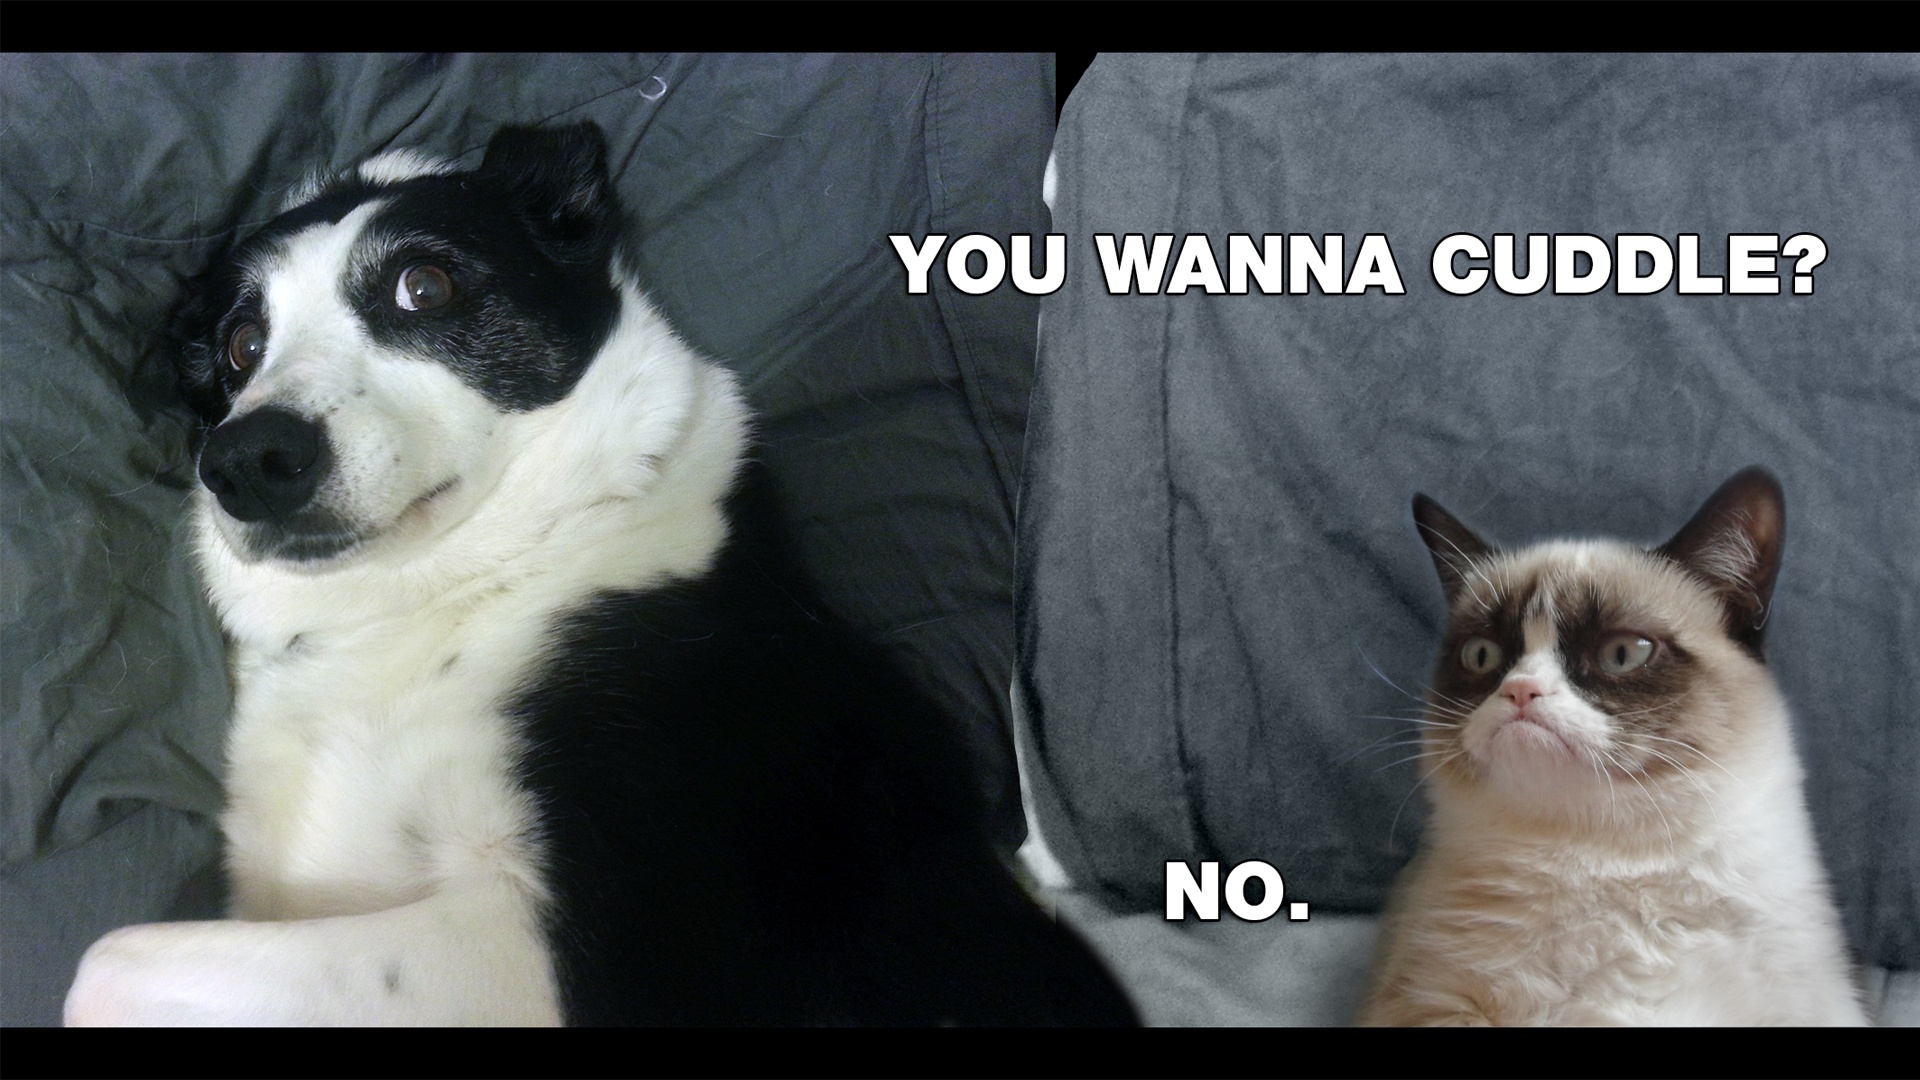  cuddle NO Grumpy Cat meme HD desktop wallpaper JikoBlog